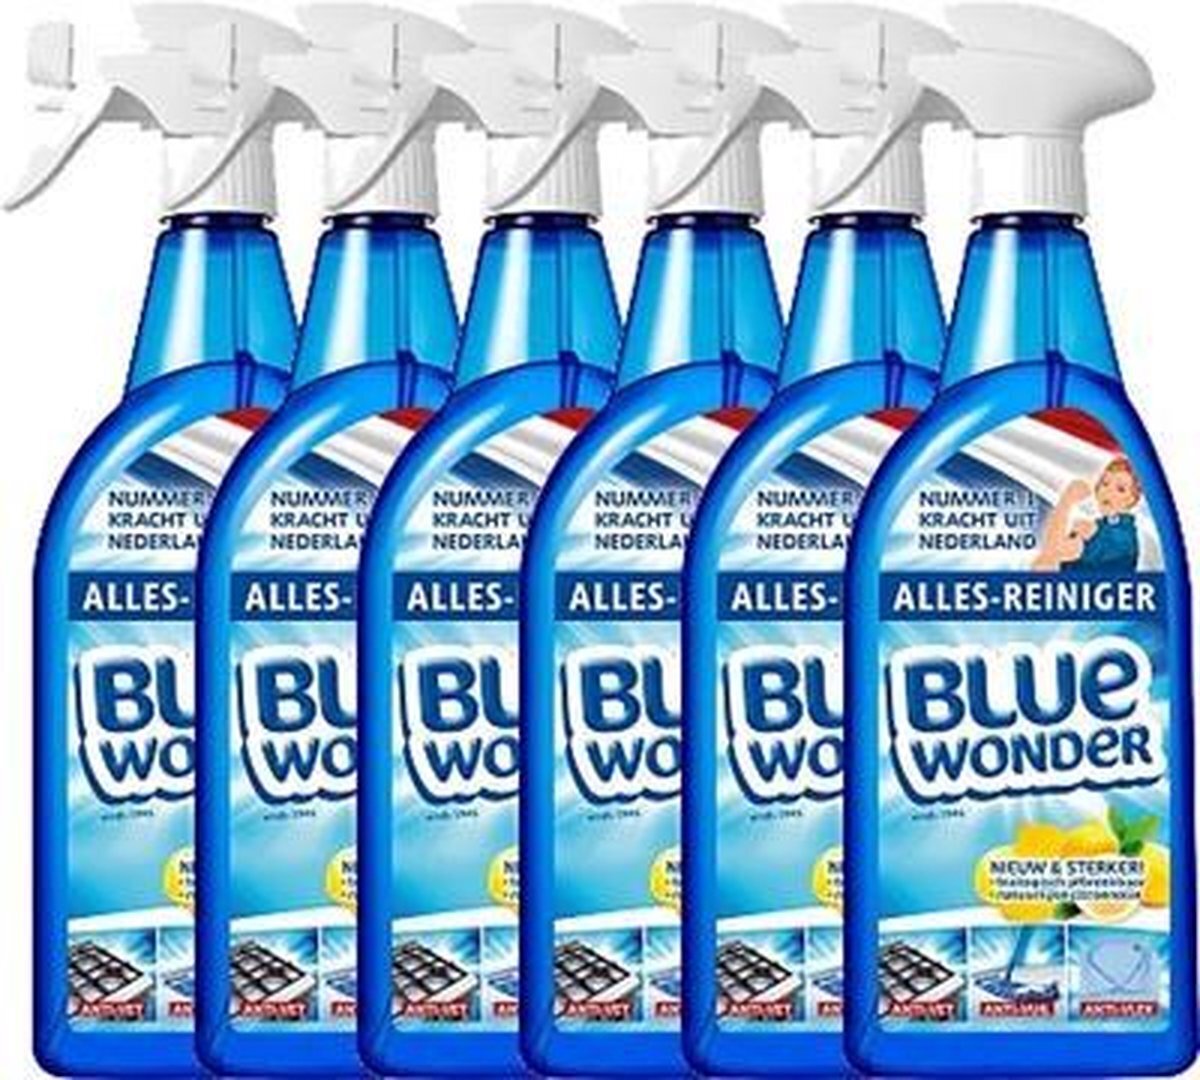 Blue Wonder Alles-reiniger Spray Voordeelverpakking – 6x 750 ml fles